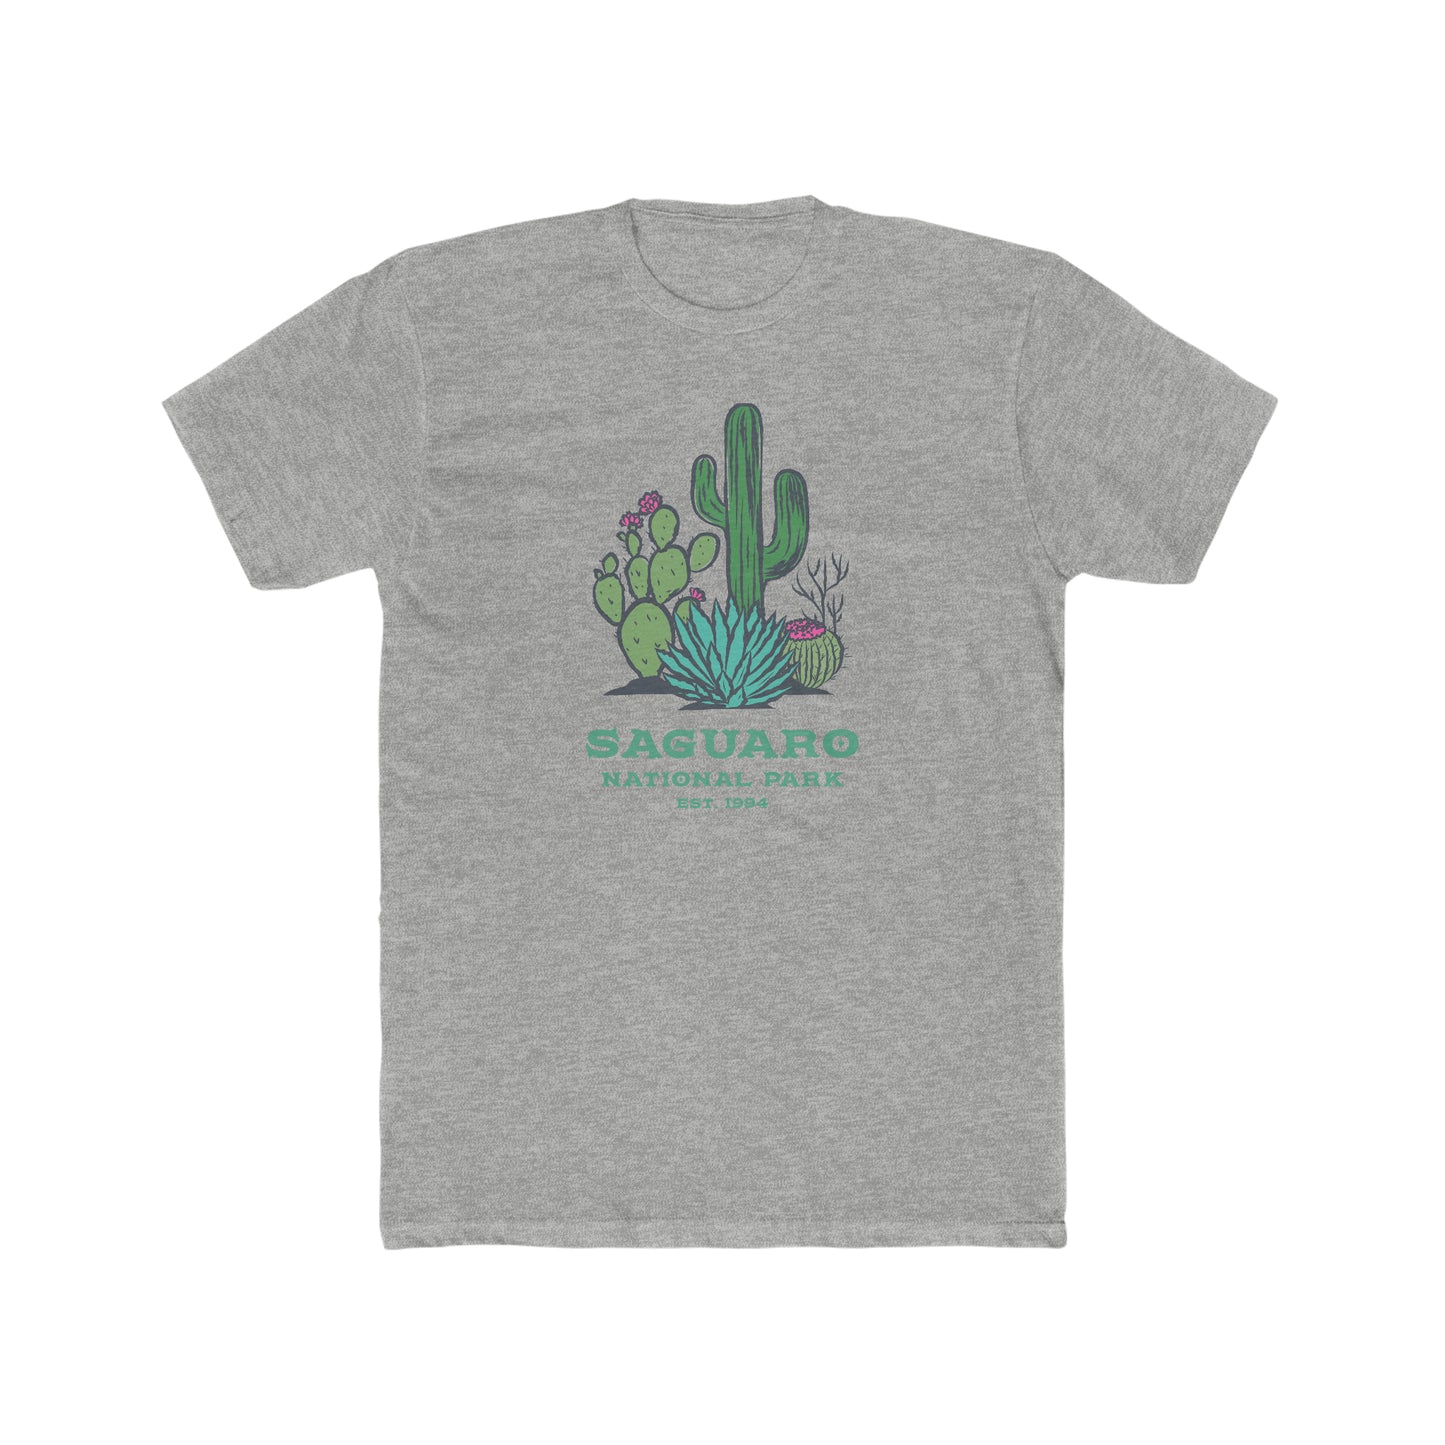 Saguaro National Park T-Shirt - Cacti Graphic